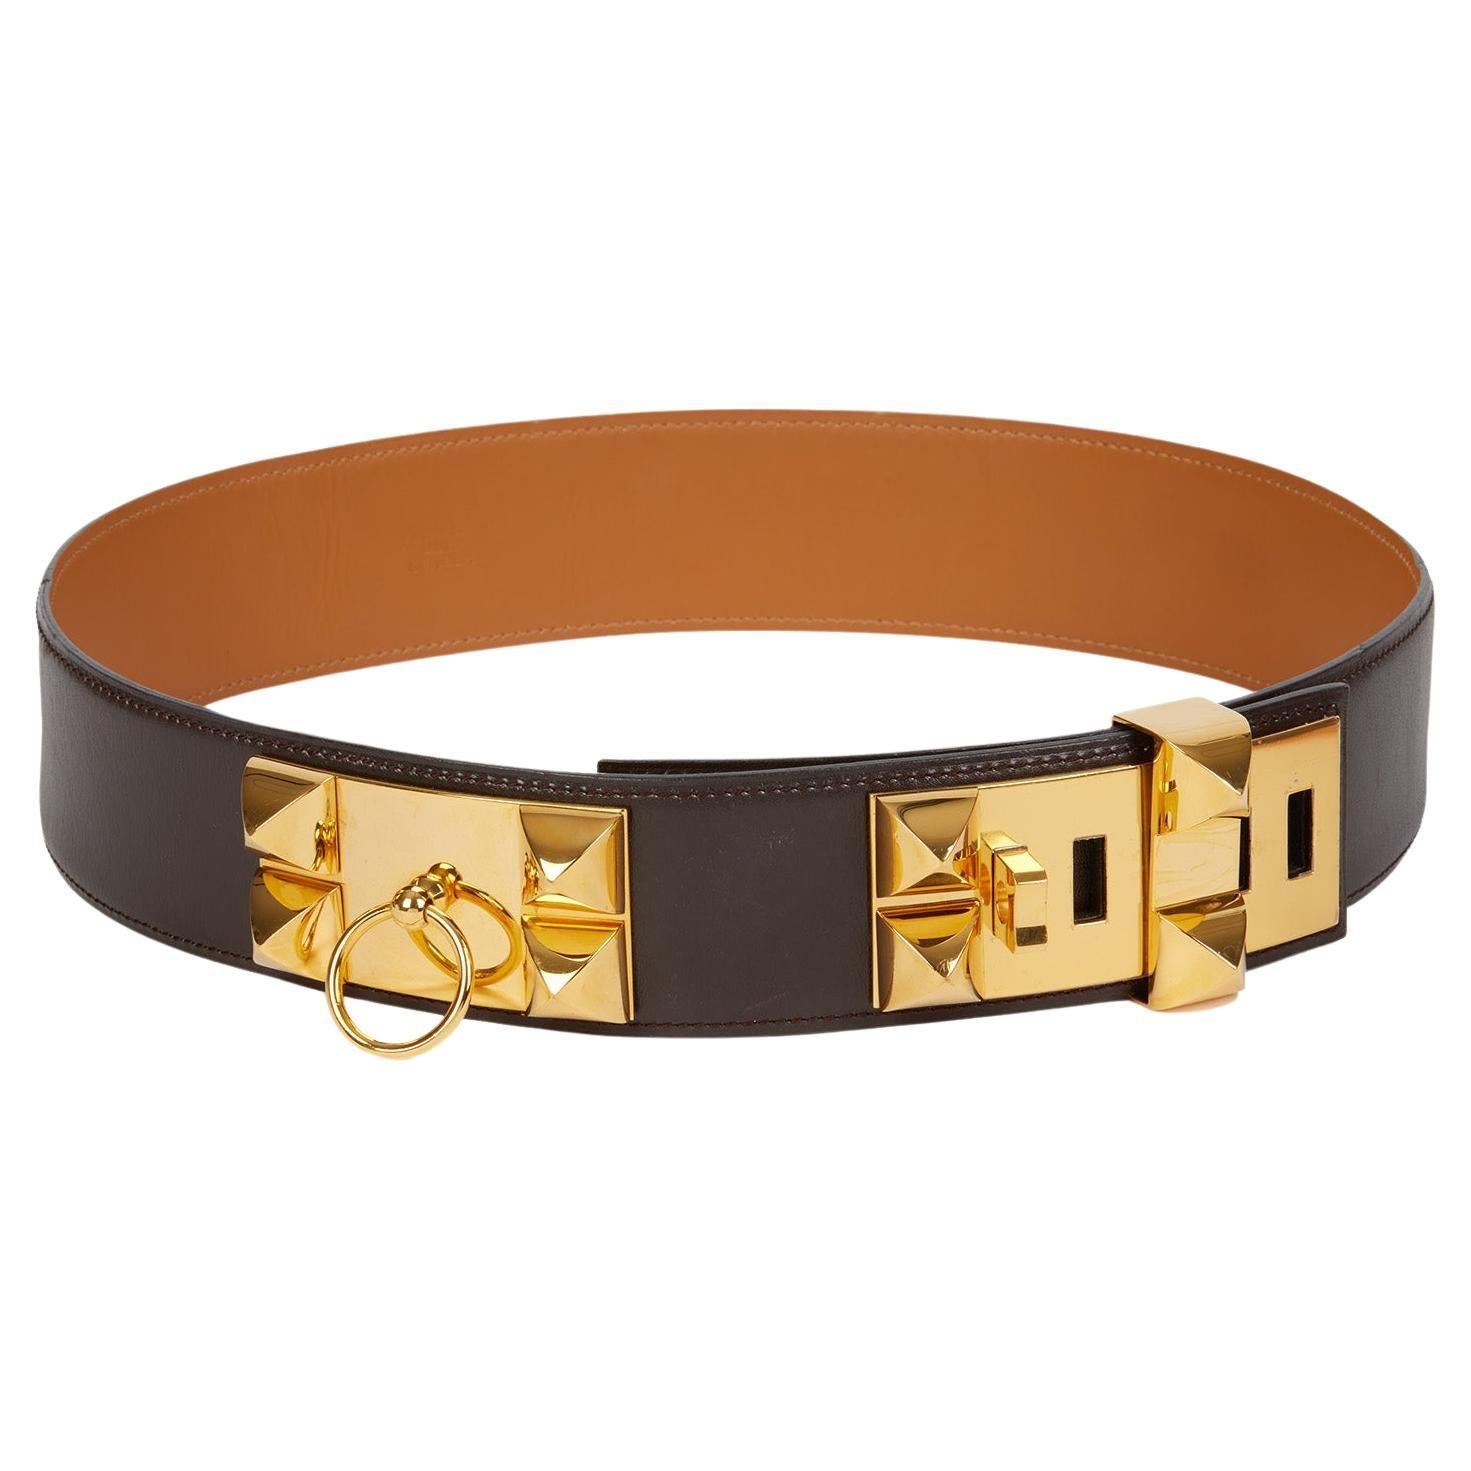 Hermès belt Buckle // Model: 